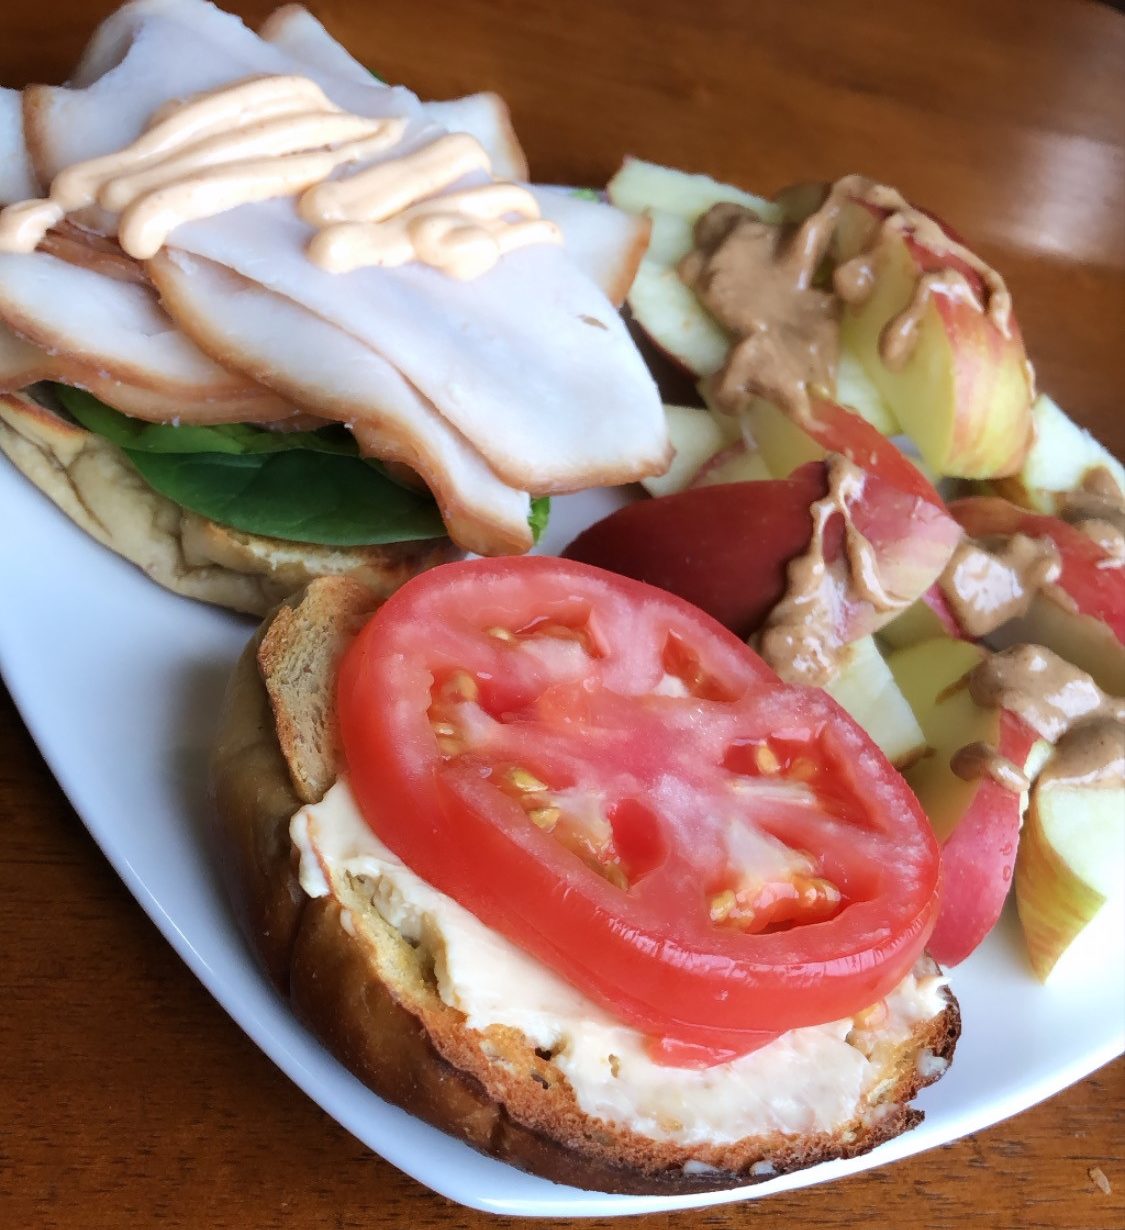 Turkey Bagel Sandwich with Apples